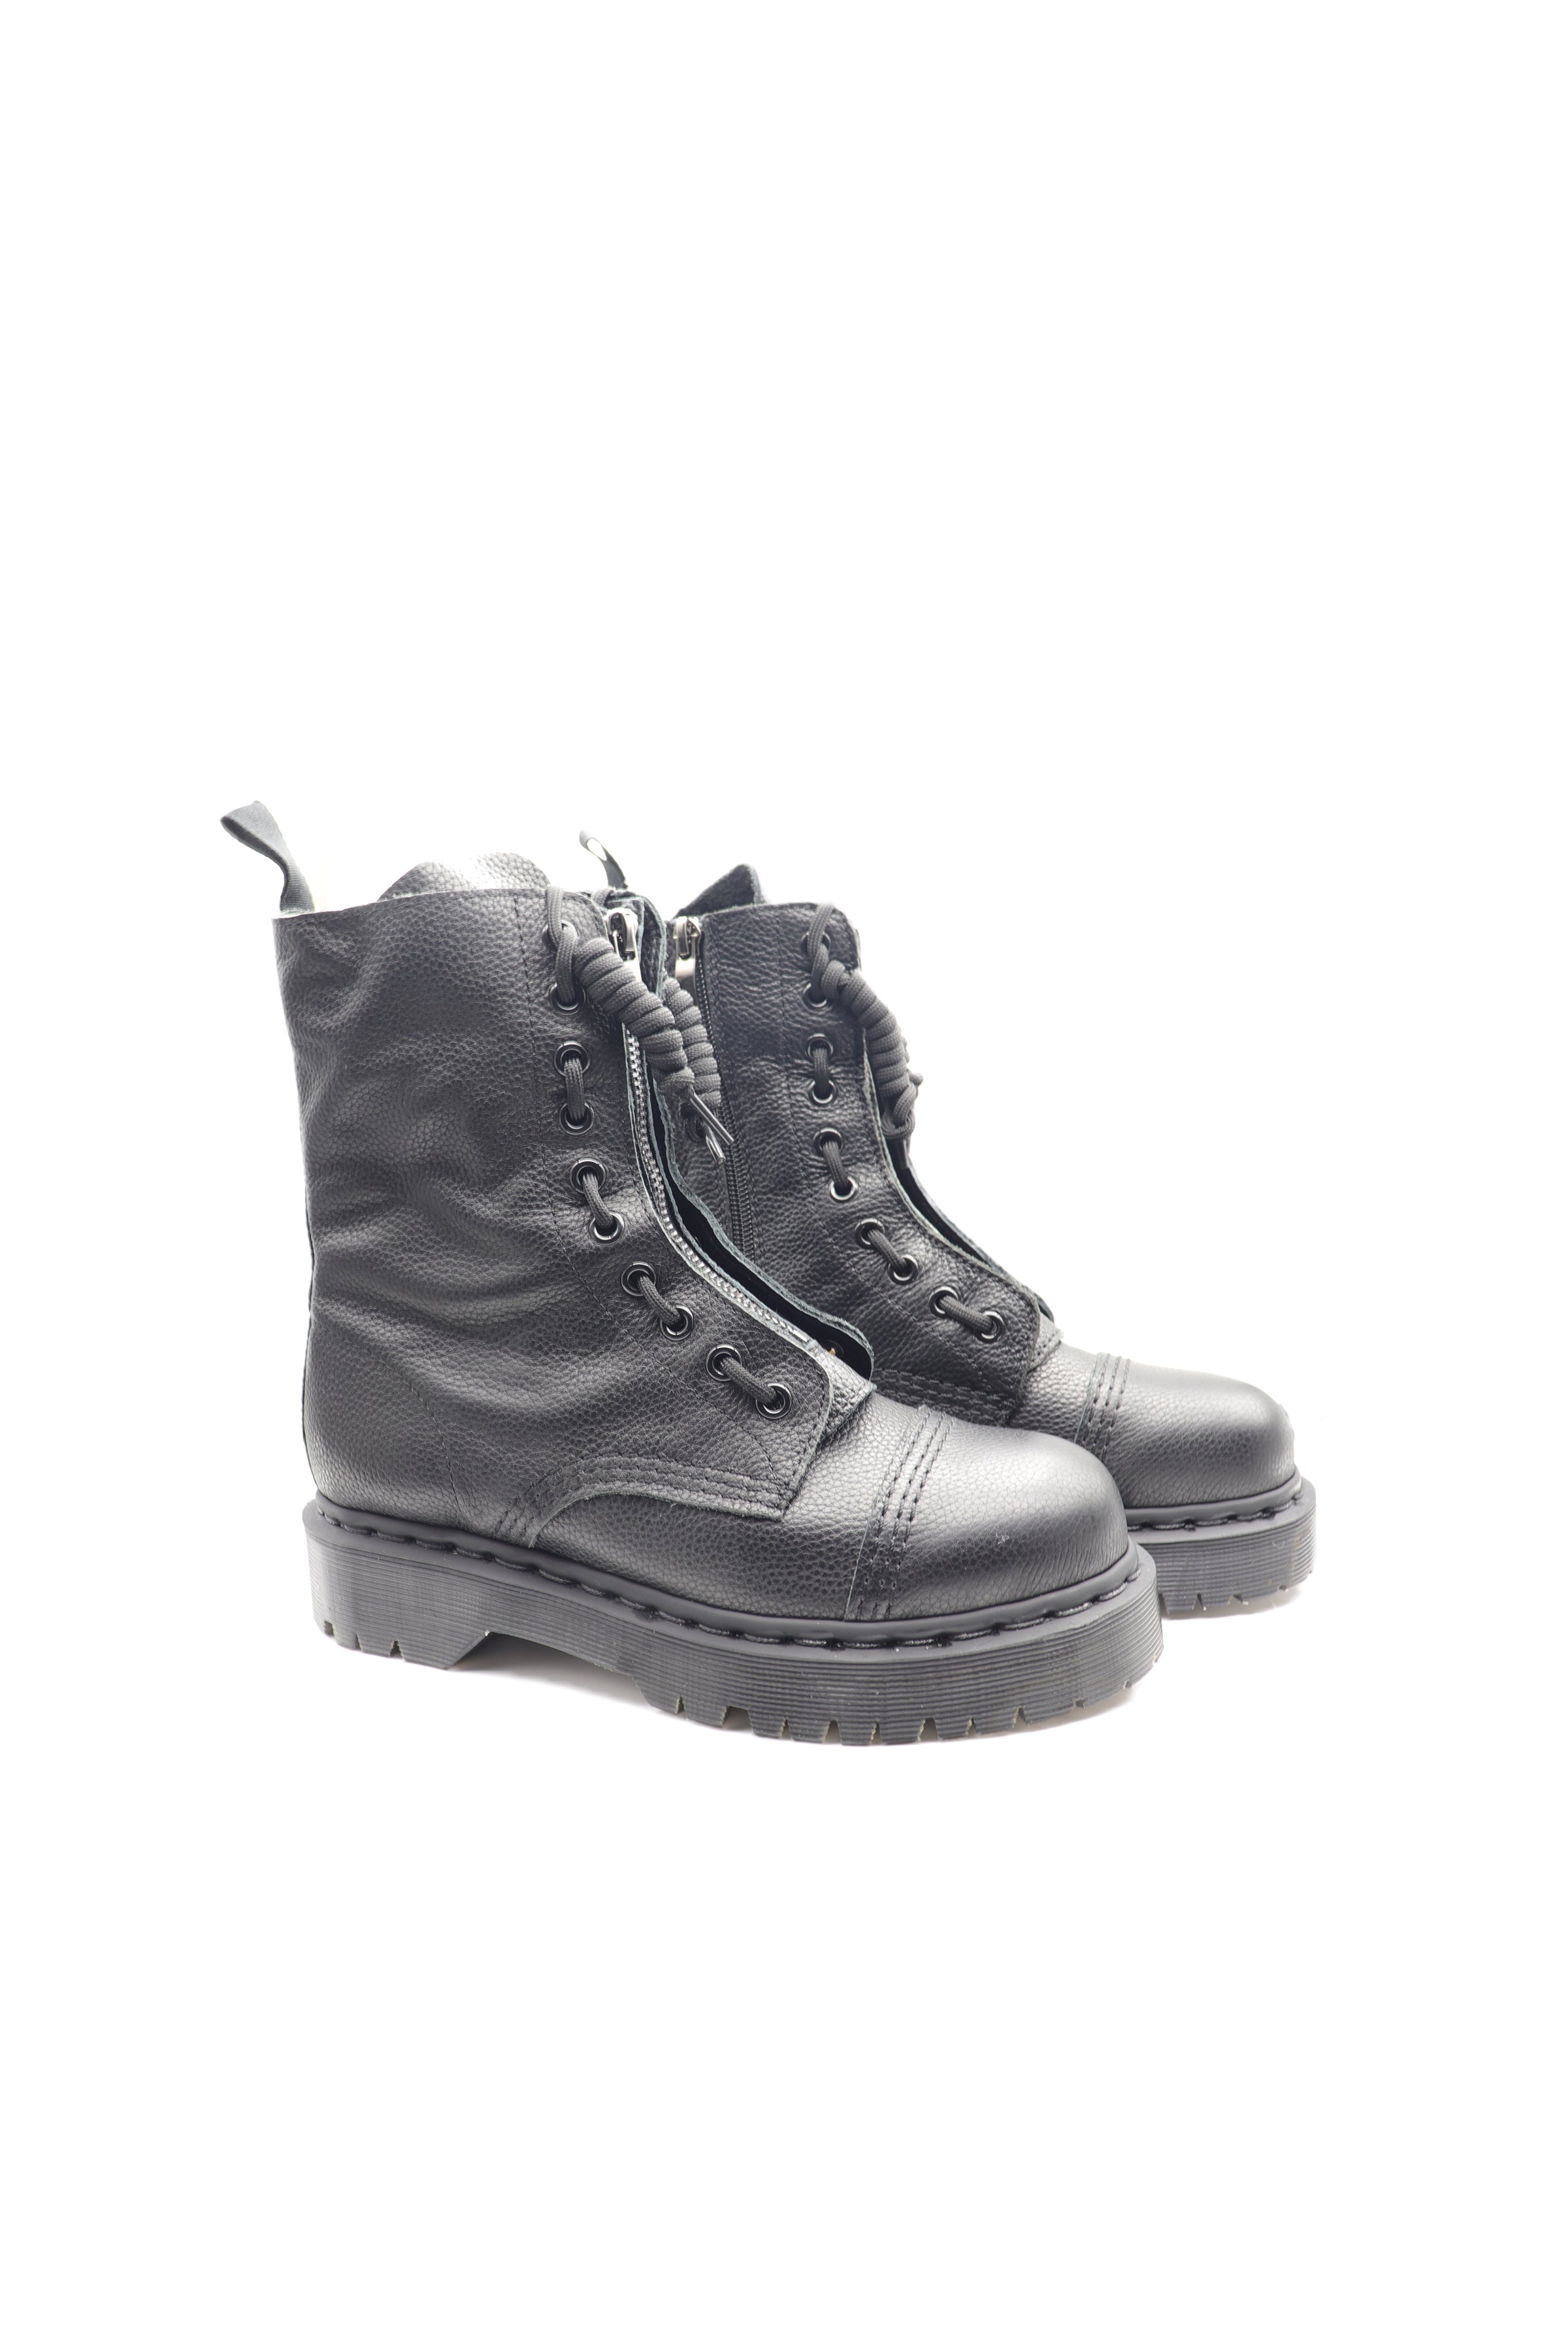 Black Cora Double Zipper Lychee Peel Leather Goodyear Welt Boots